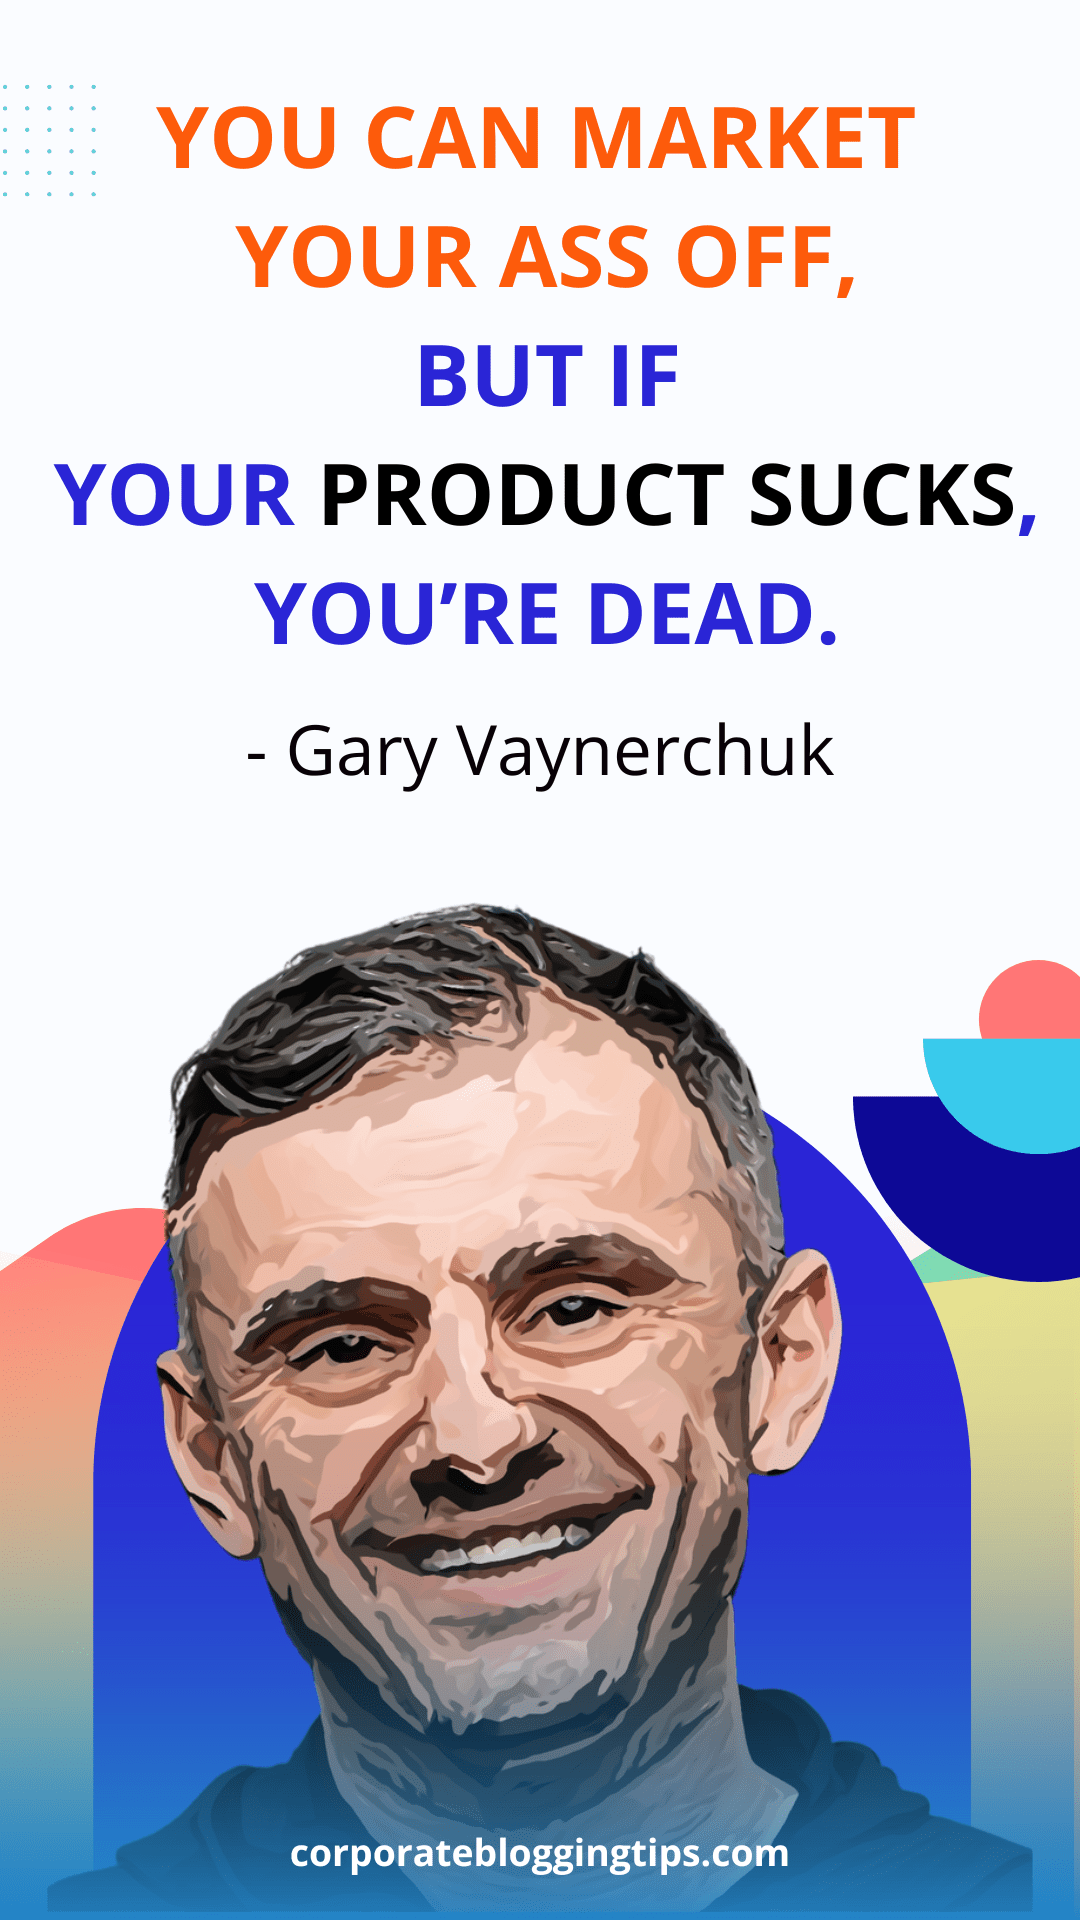 Gary Vaynerchuk quotes for marketing